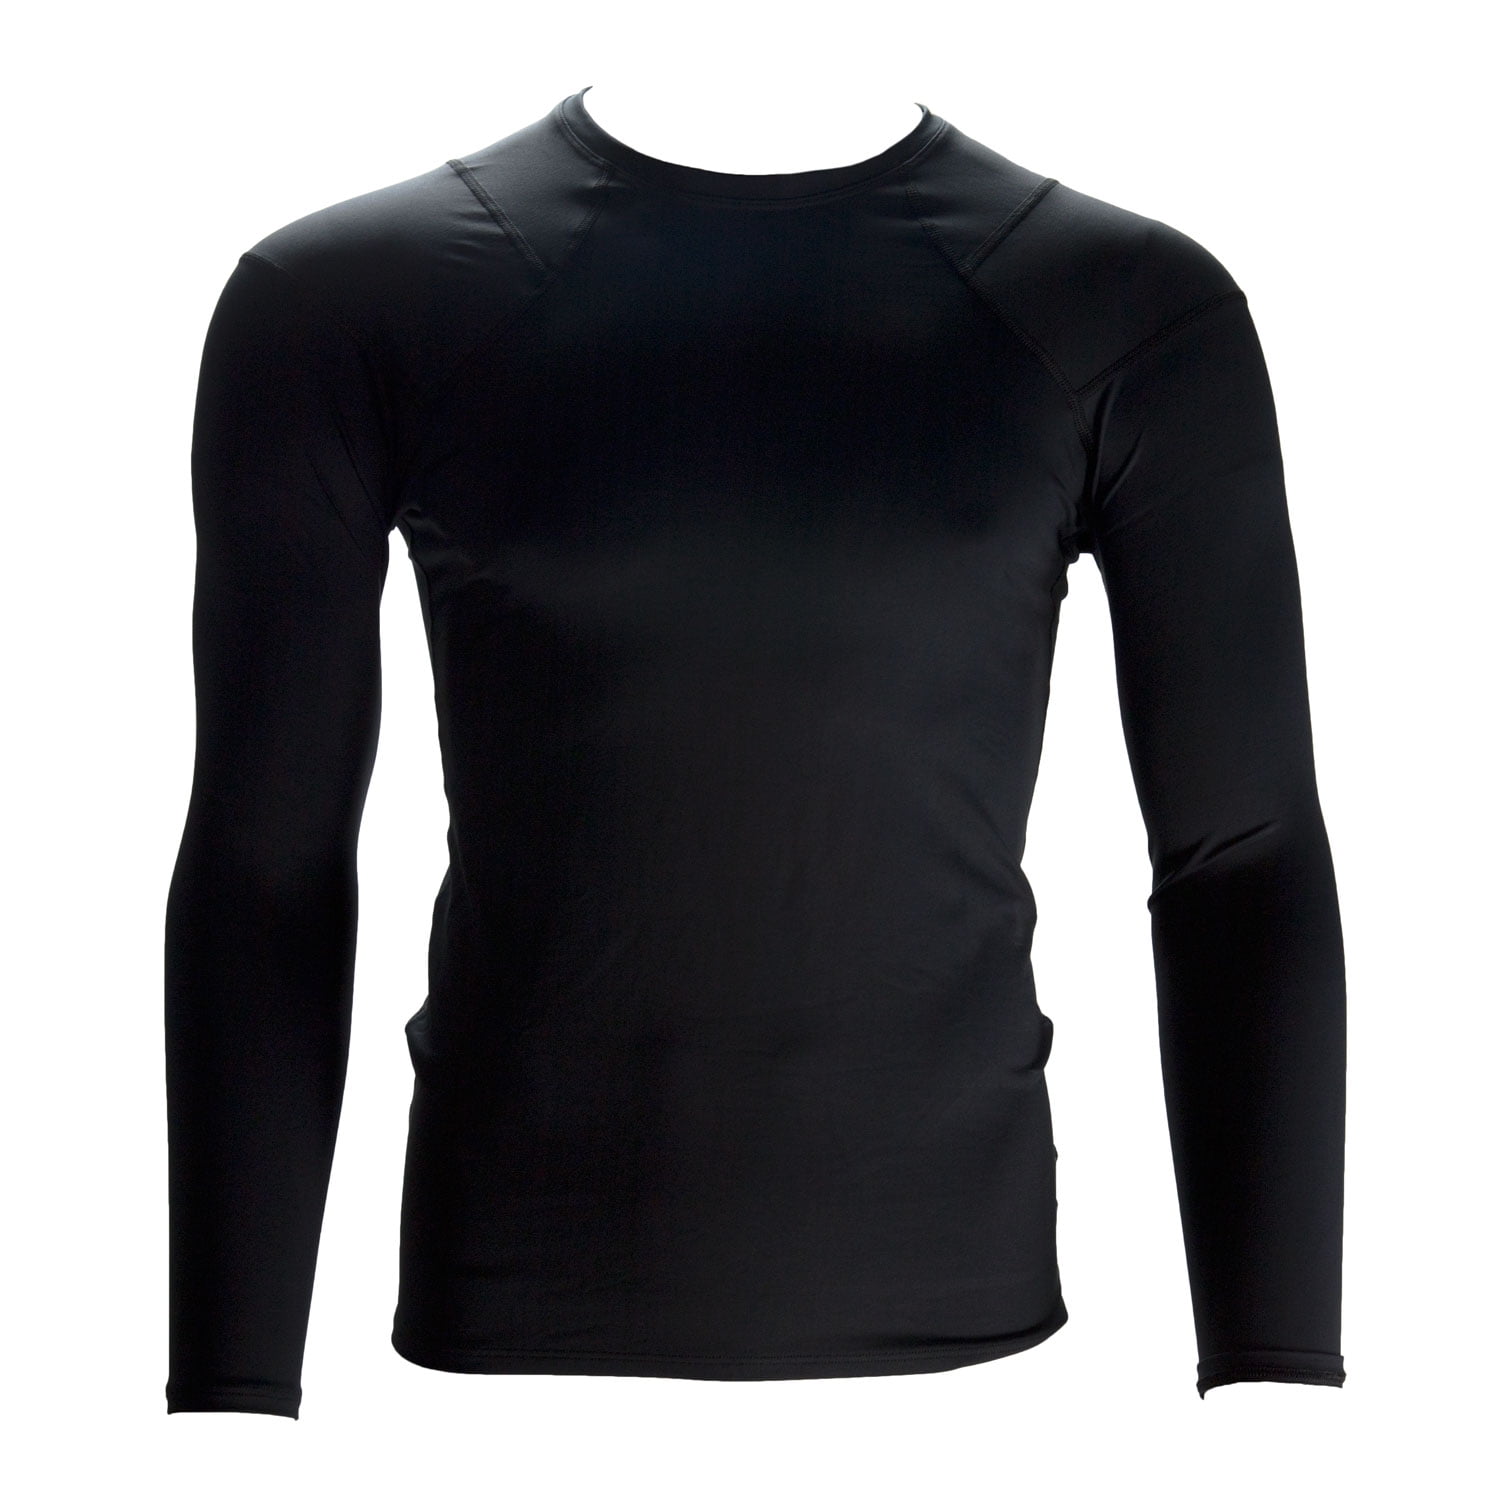 TOMMIE COPPER Men's Shoulder Centric Support Shirt, Black, X-Large 